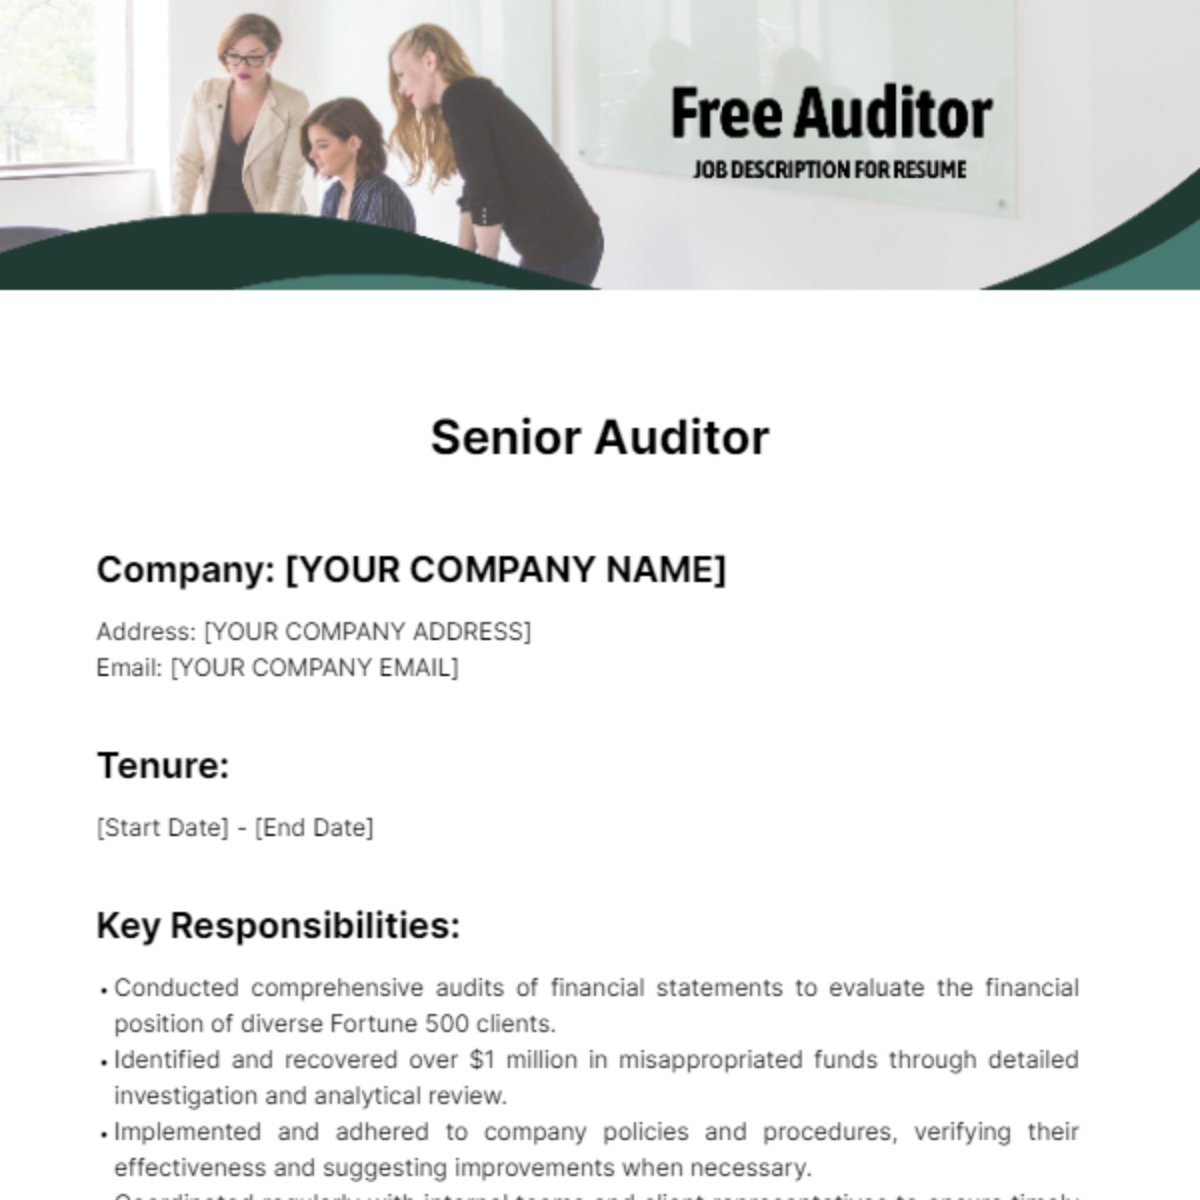 Free Auditor Job Description for Resume Template